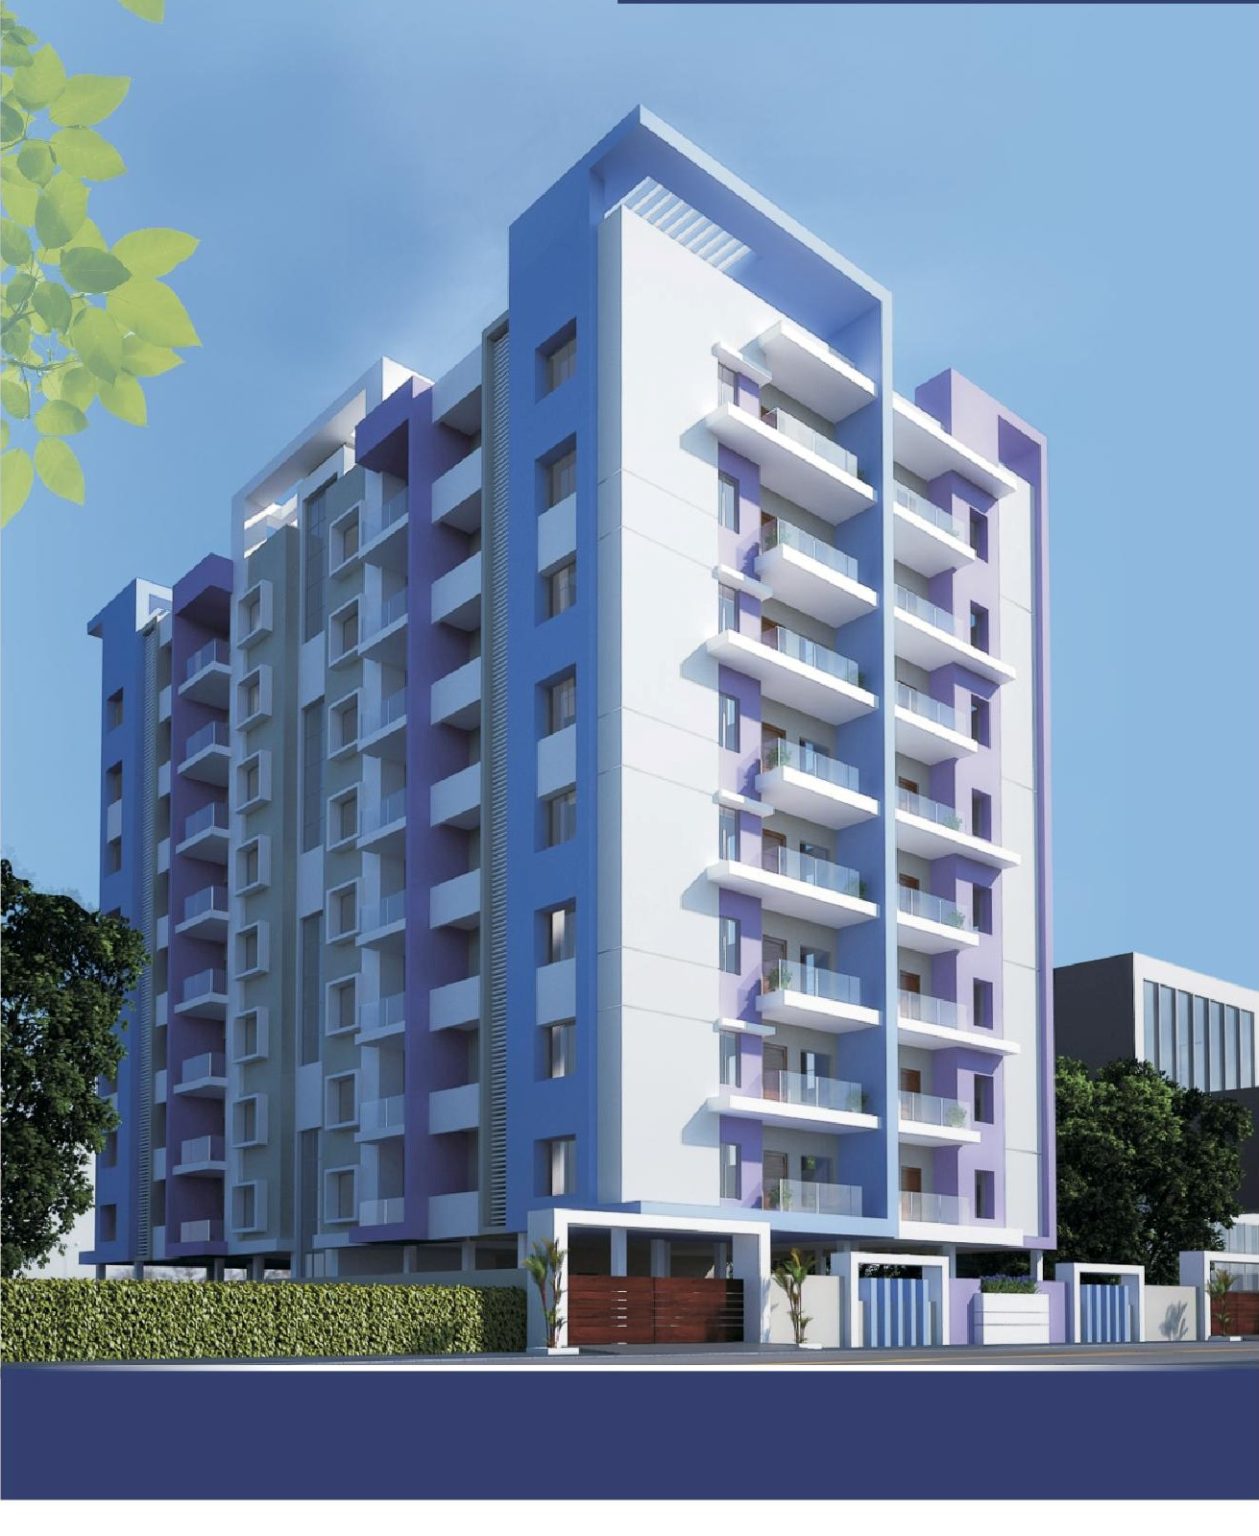 Sale Apartments / Flats Dharampeth Nagpur Flats for Sale Nagpur